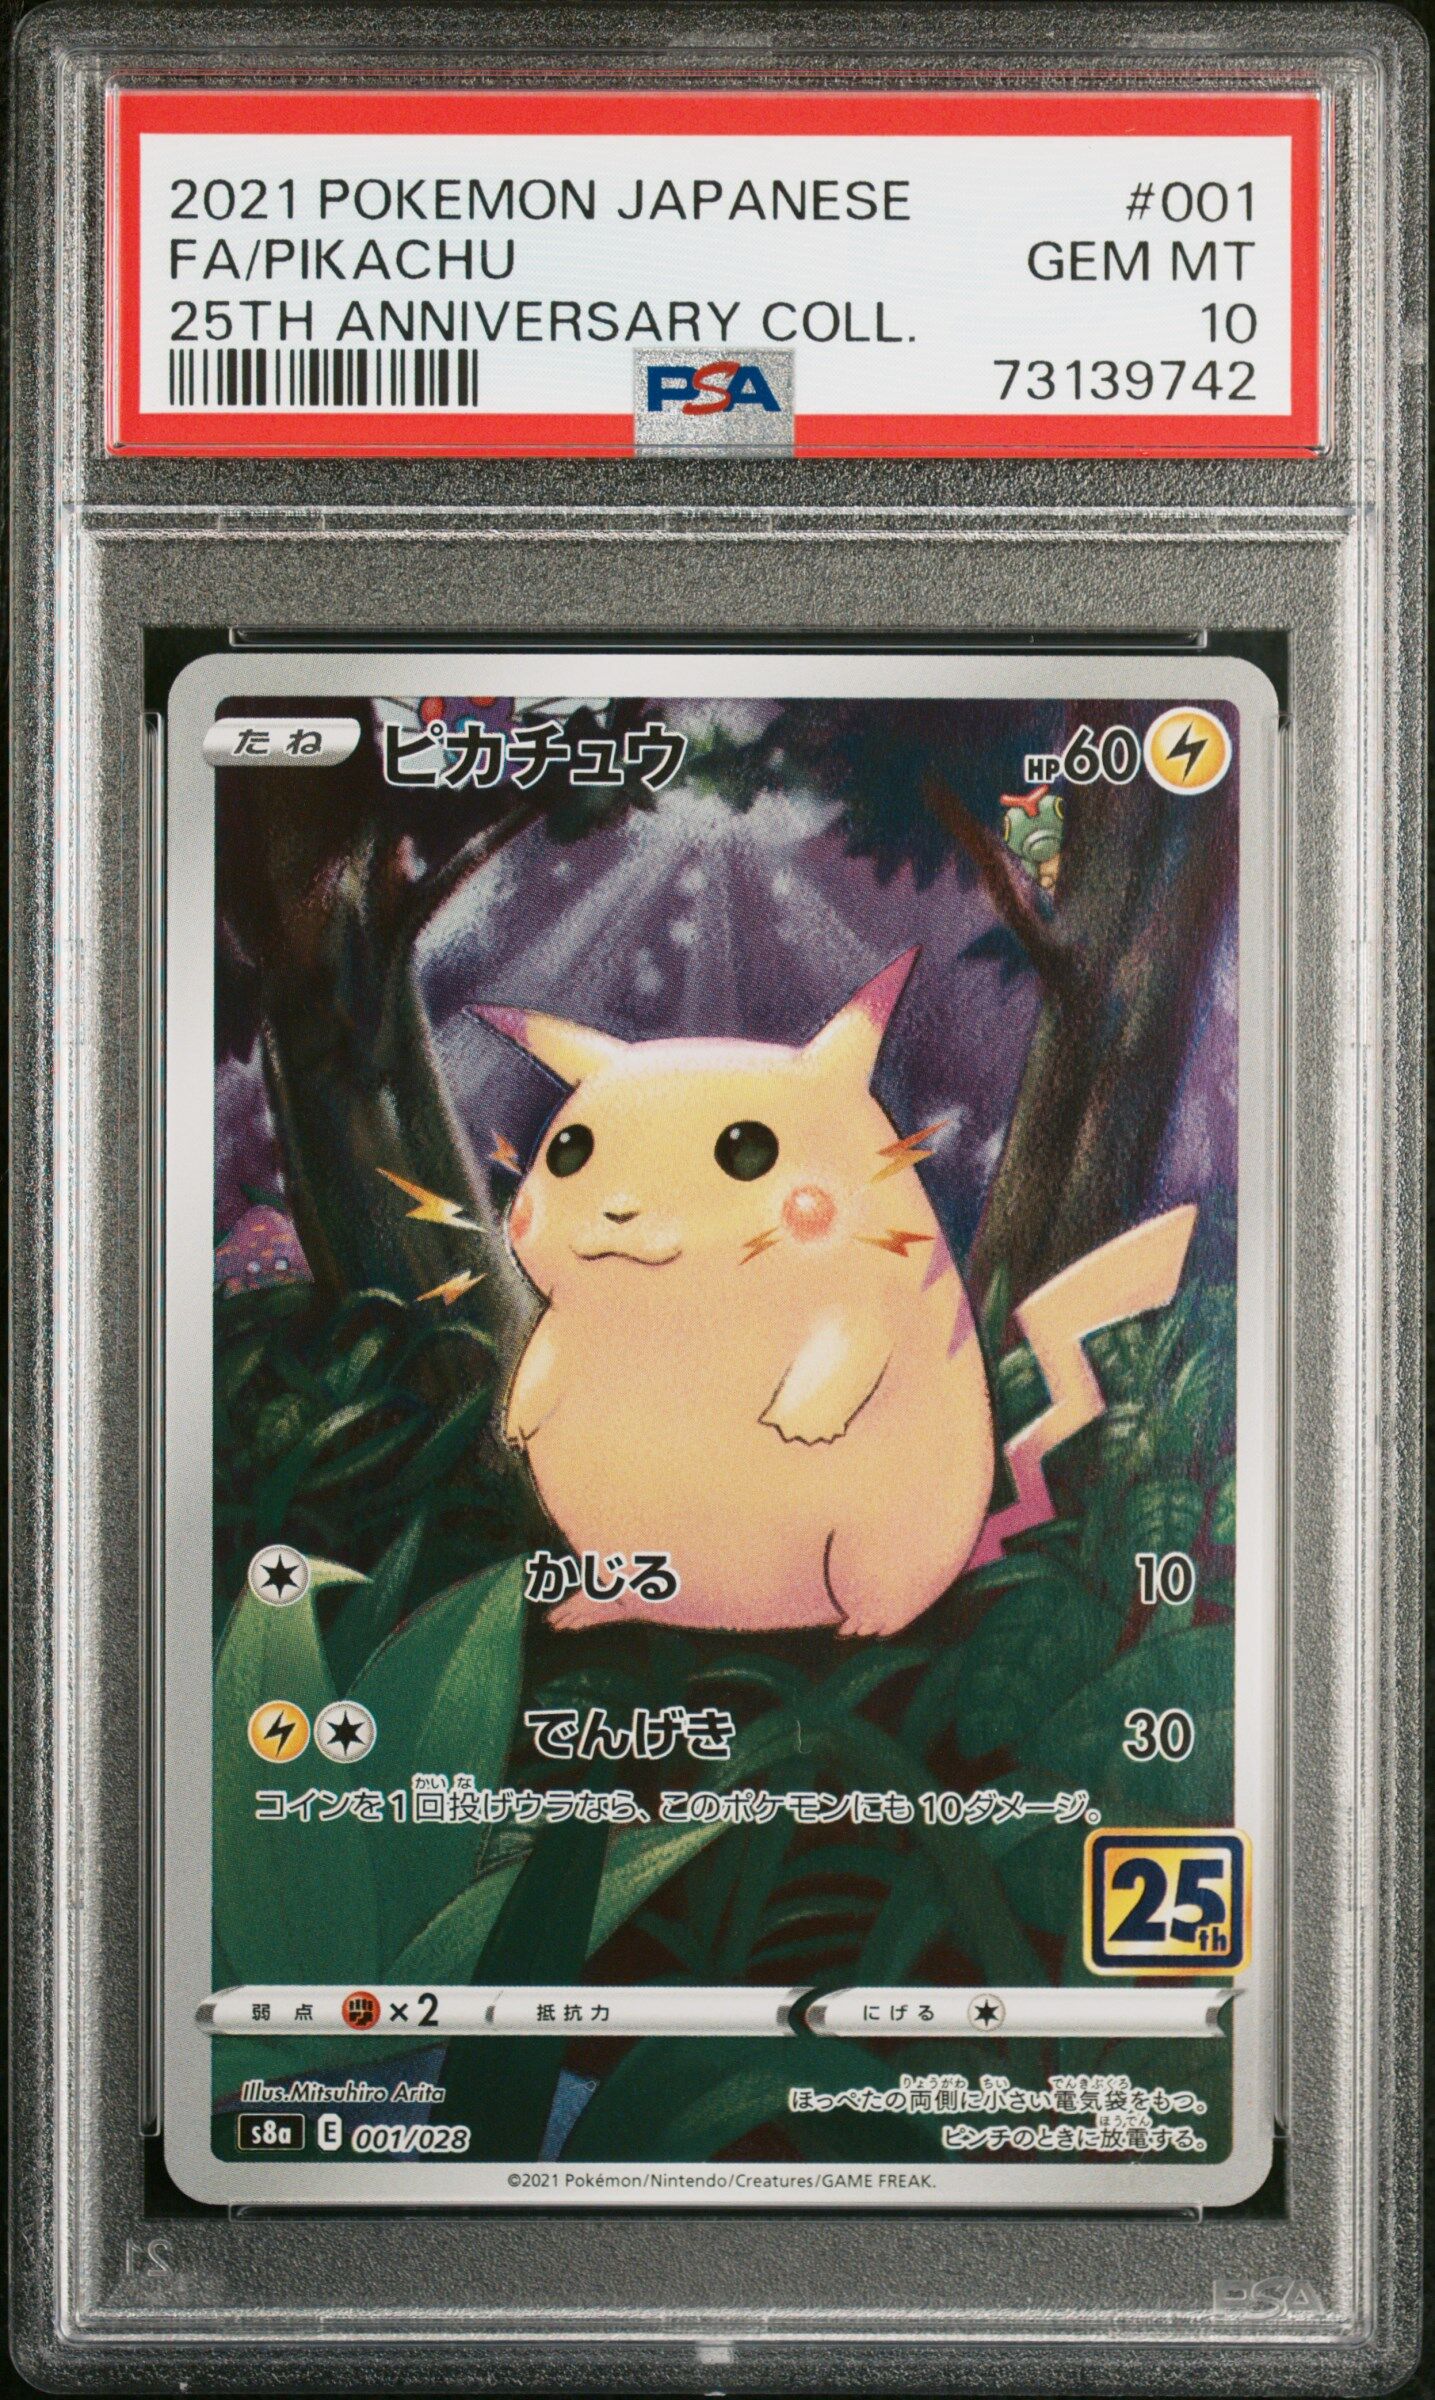 Pikachu 001/028 - 25th Anniversary Collection s8a - Full Art - PSA 10 GEM MT - Pokémon